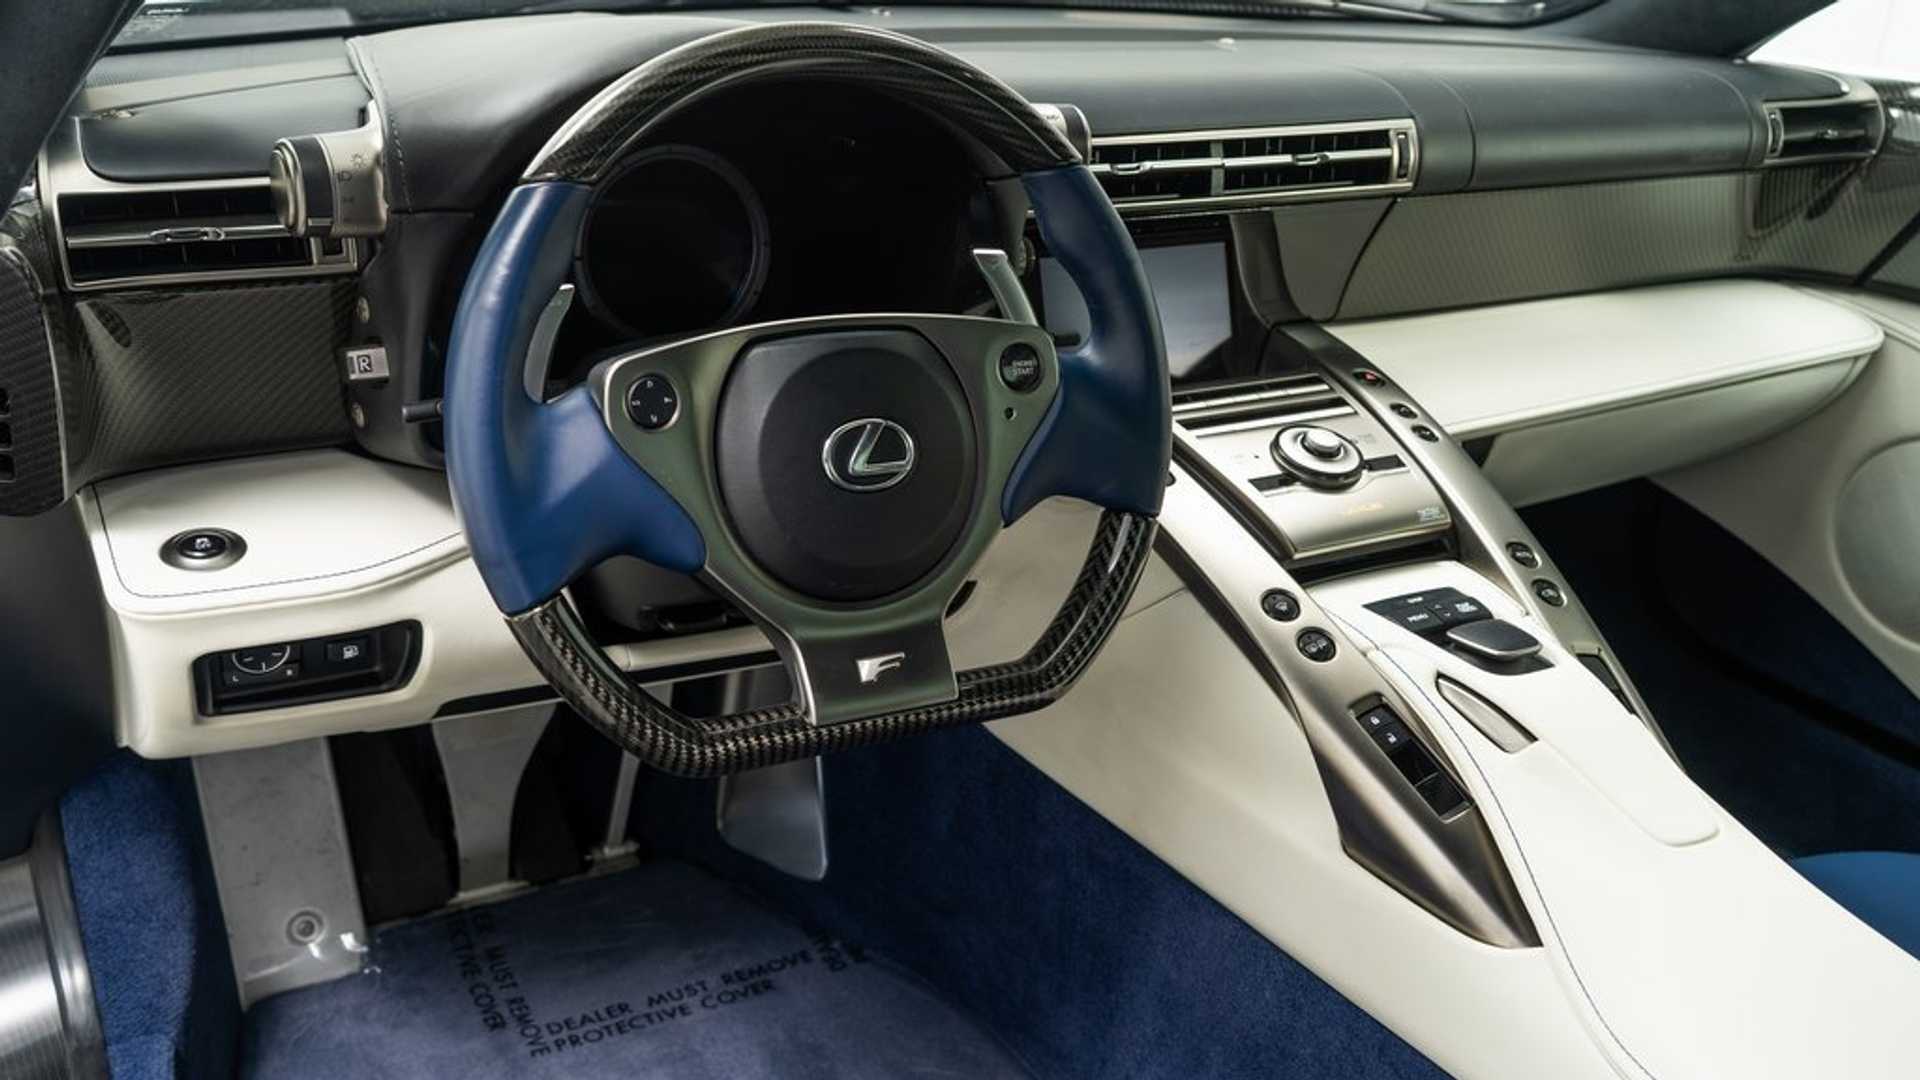 Sale a la venta el Lexus LFA que perteneció a Paris Hilton: 457.000 euros tienen la culpa